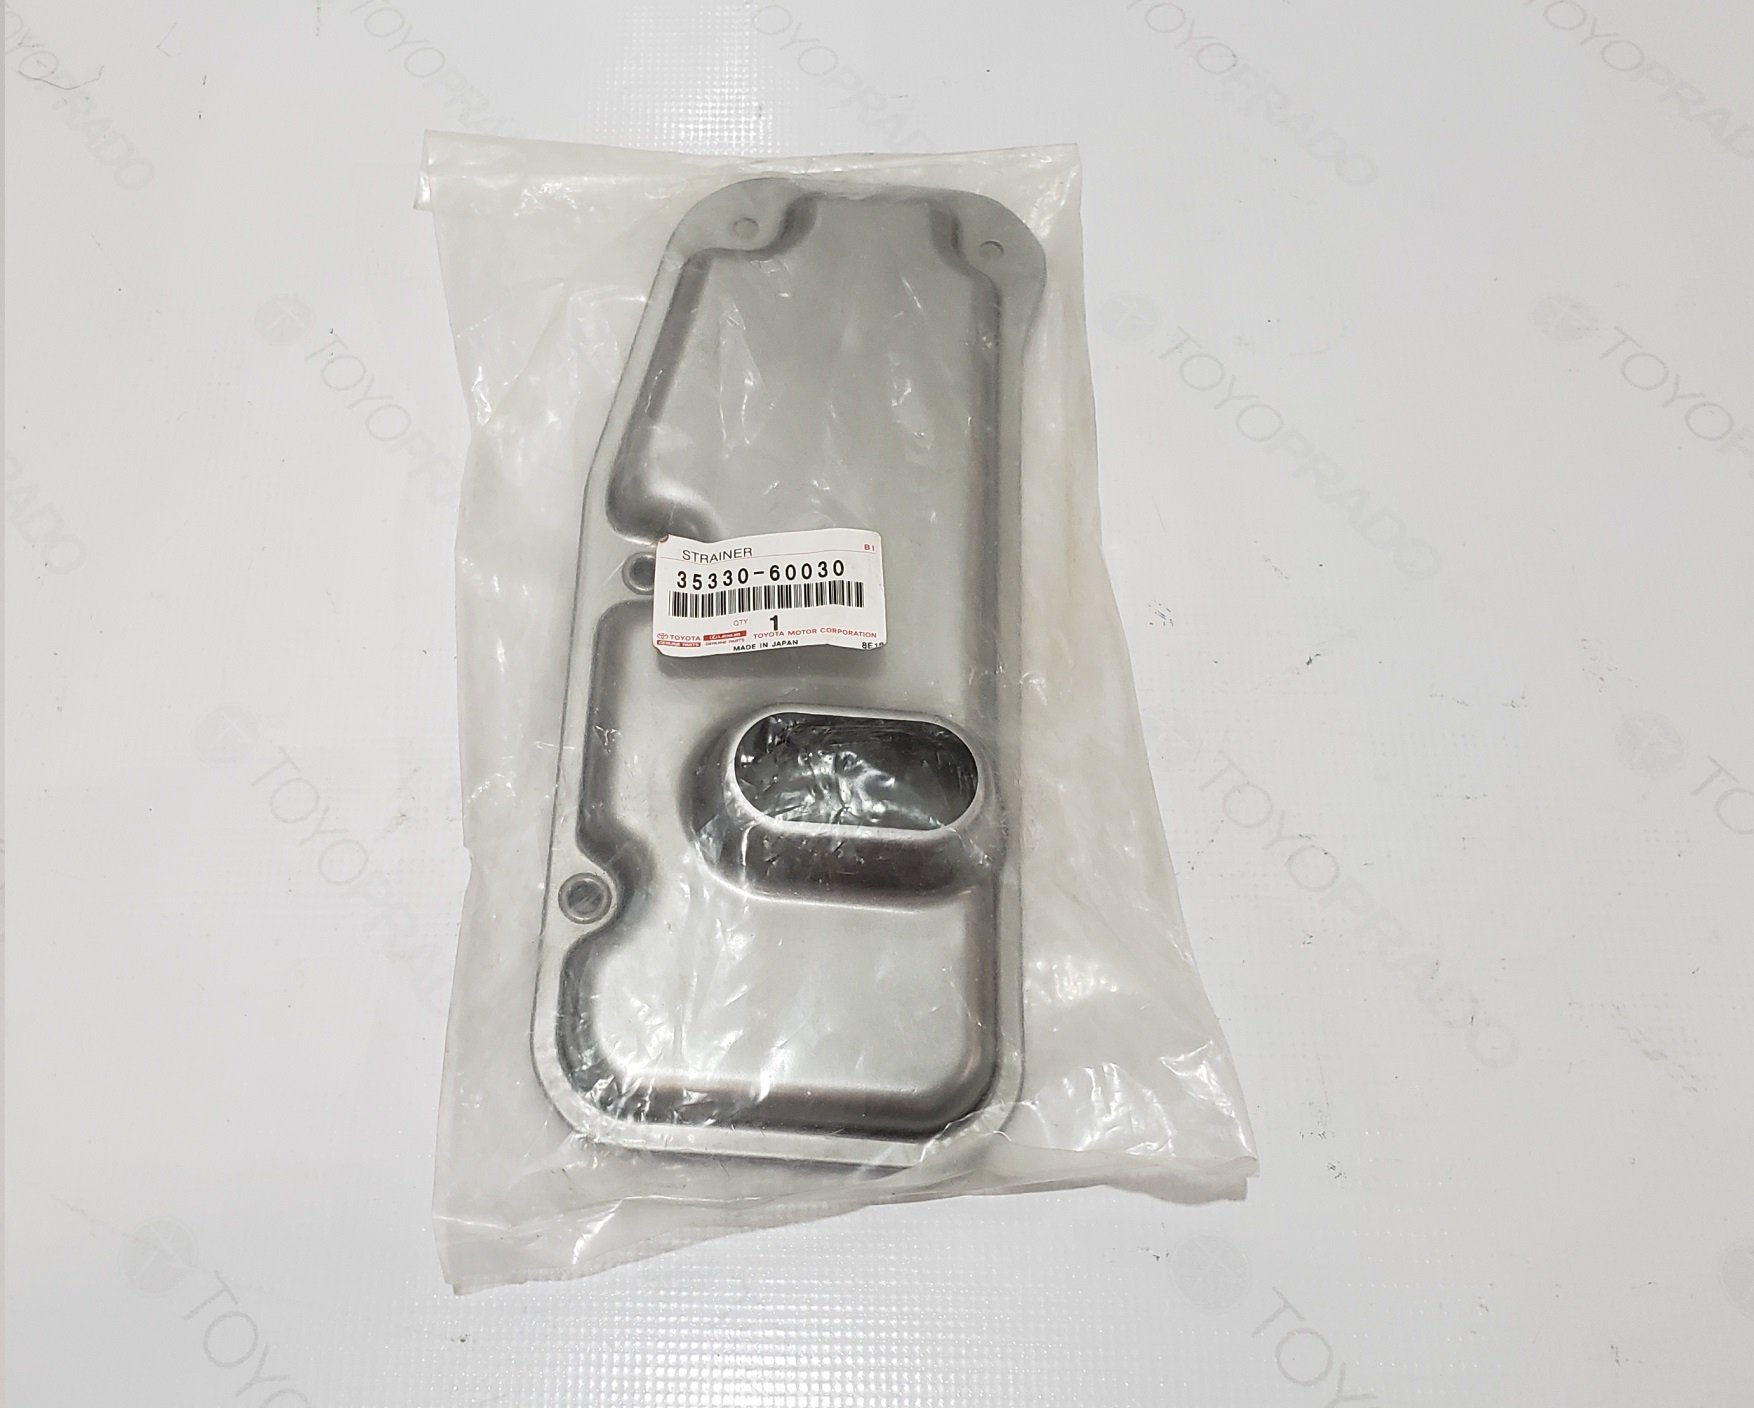 Filtro Aceite Caja Automatica Prado, Meru, 4Runner (35330-60030)